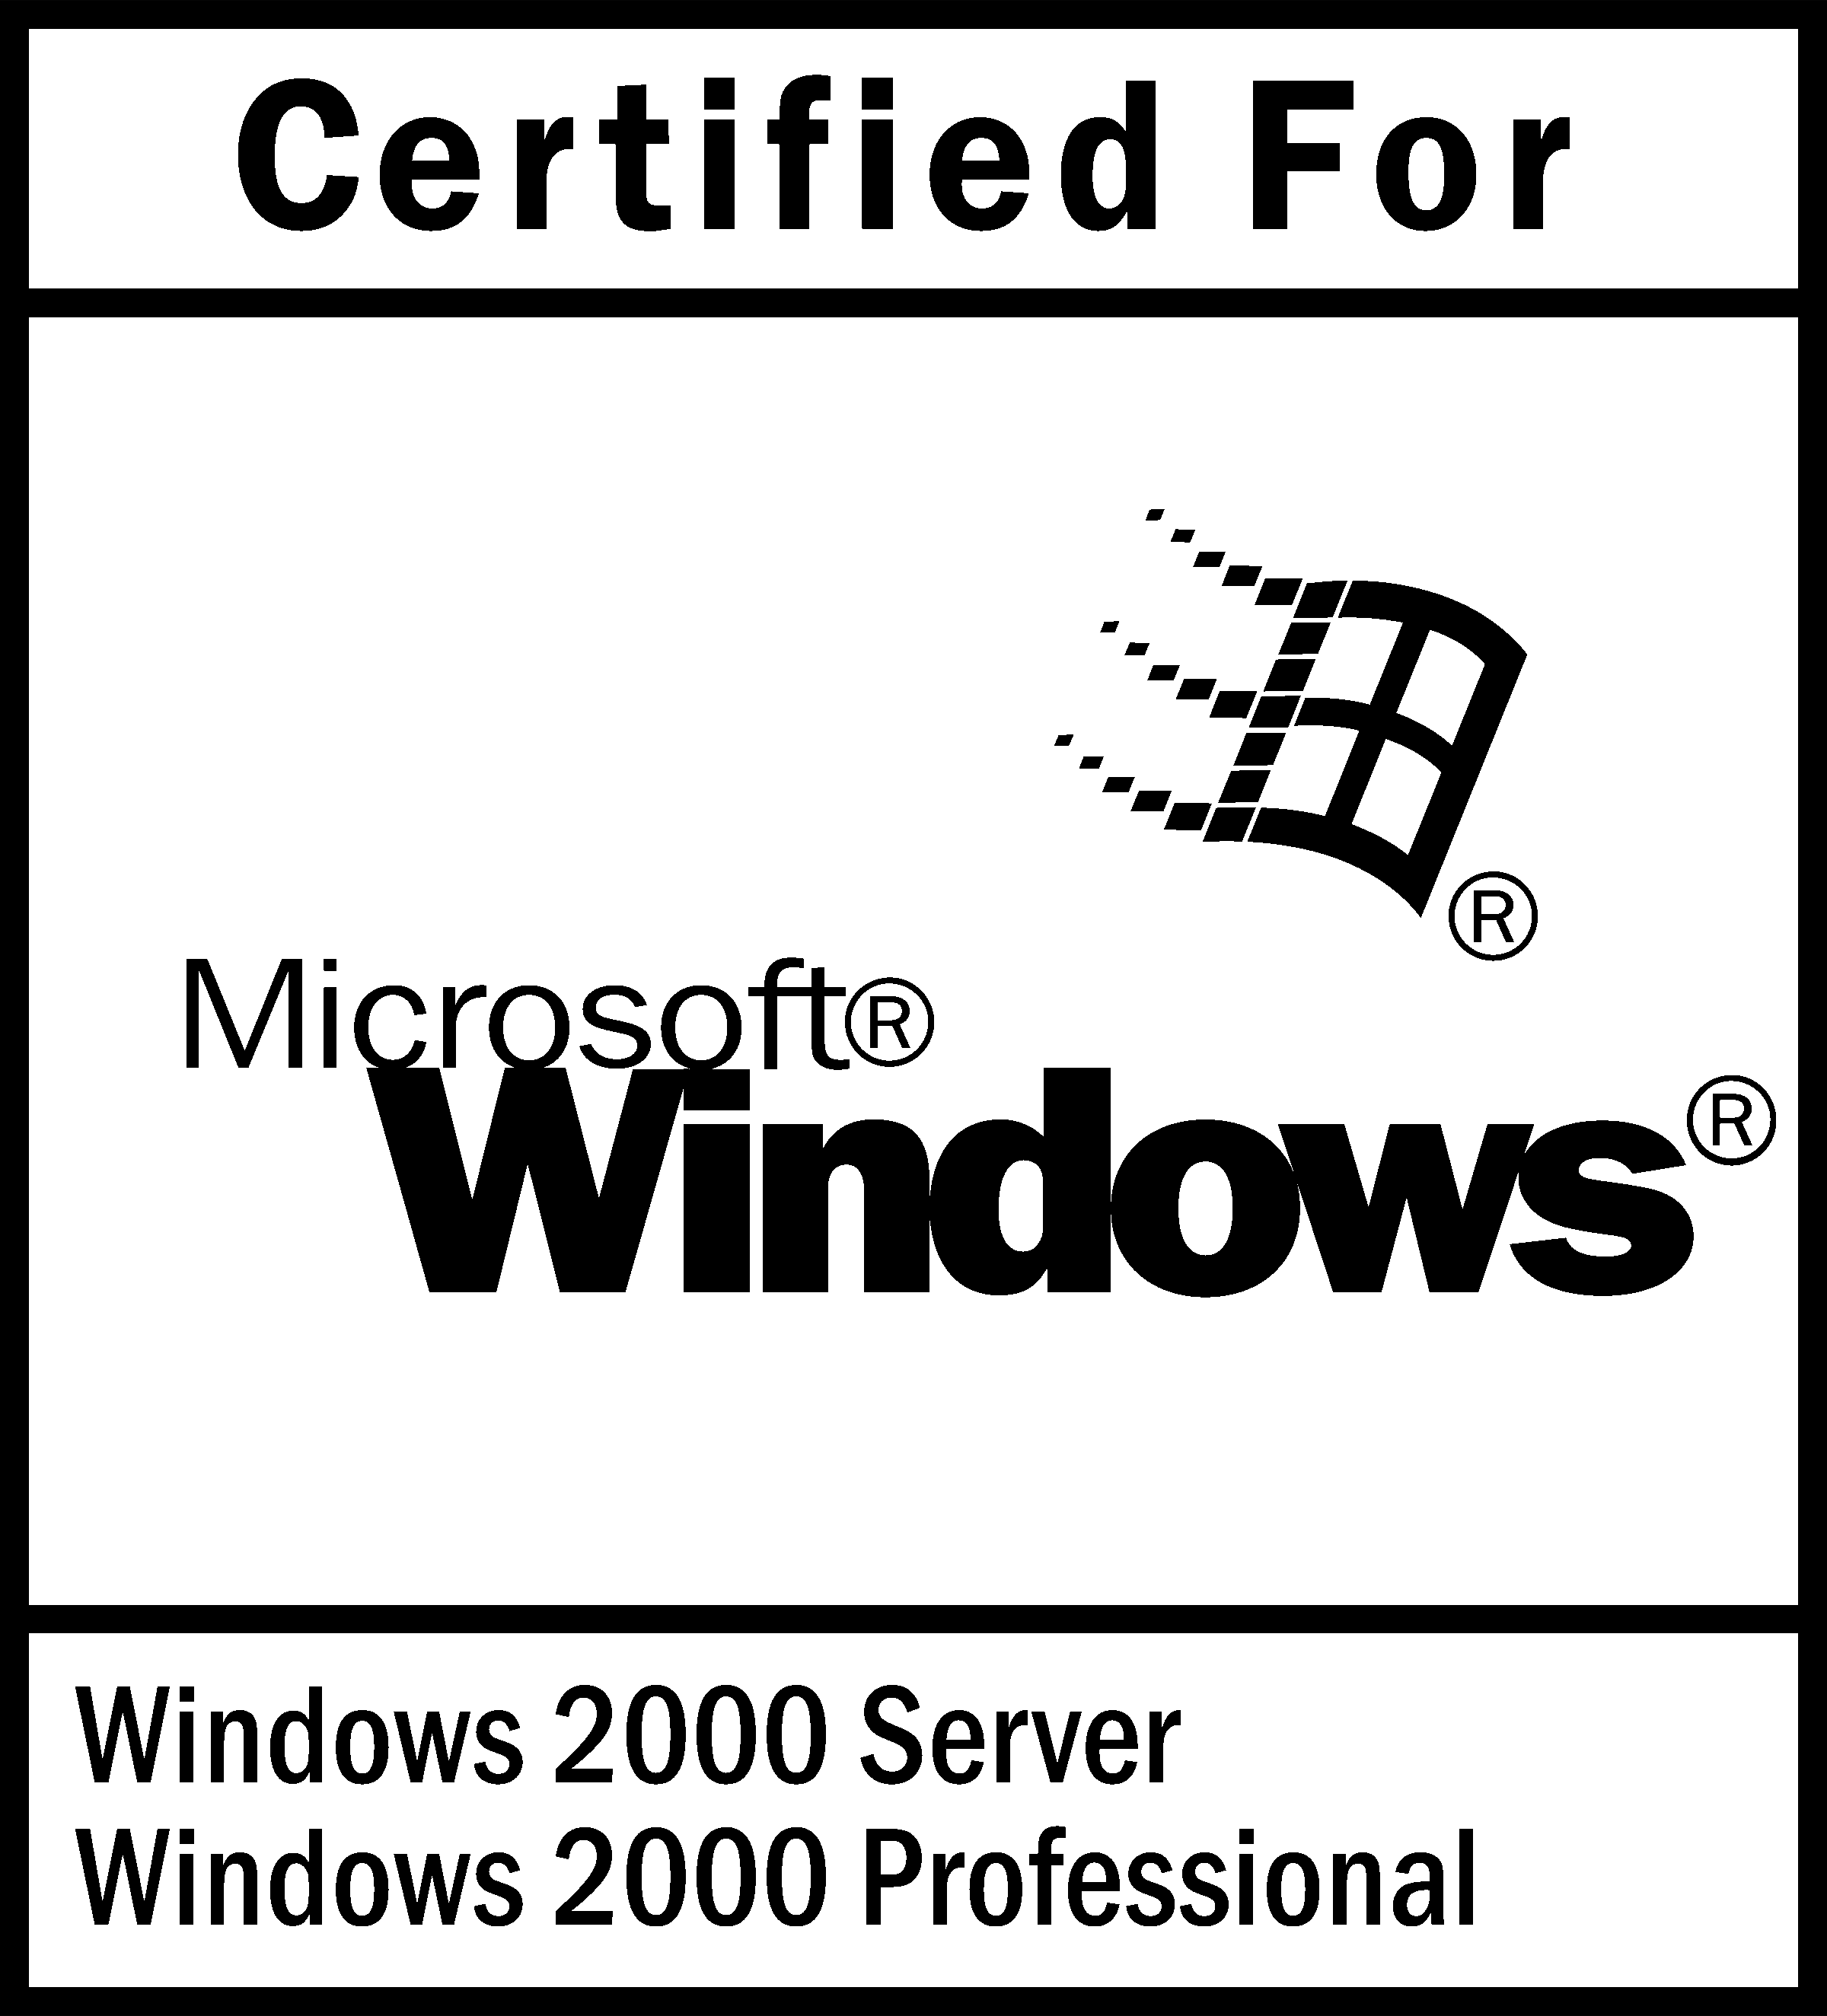 Microsoft Windows 00 Logo Logodix